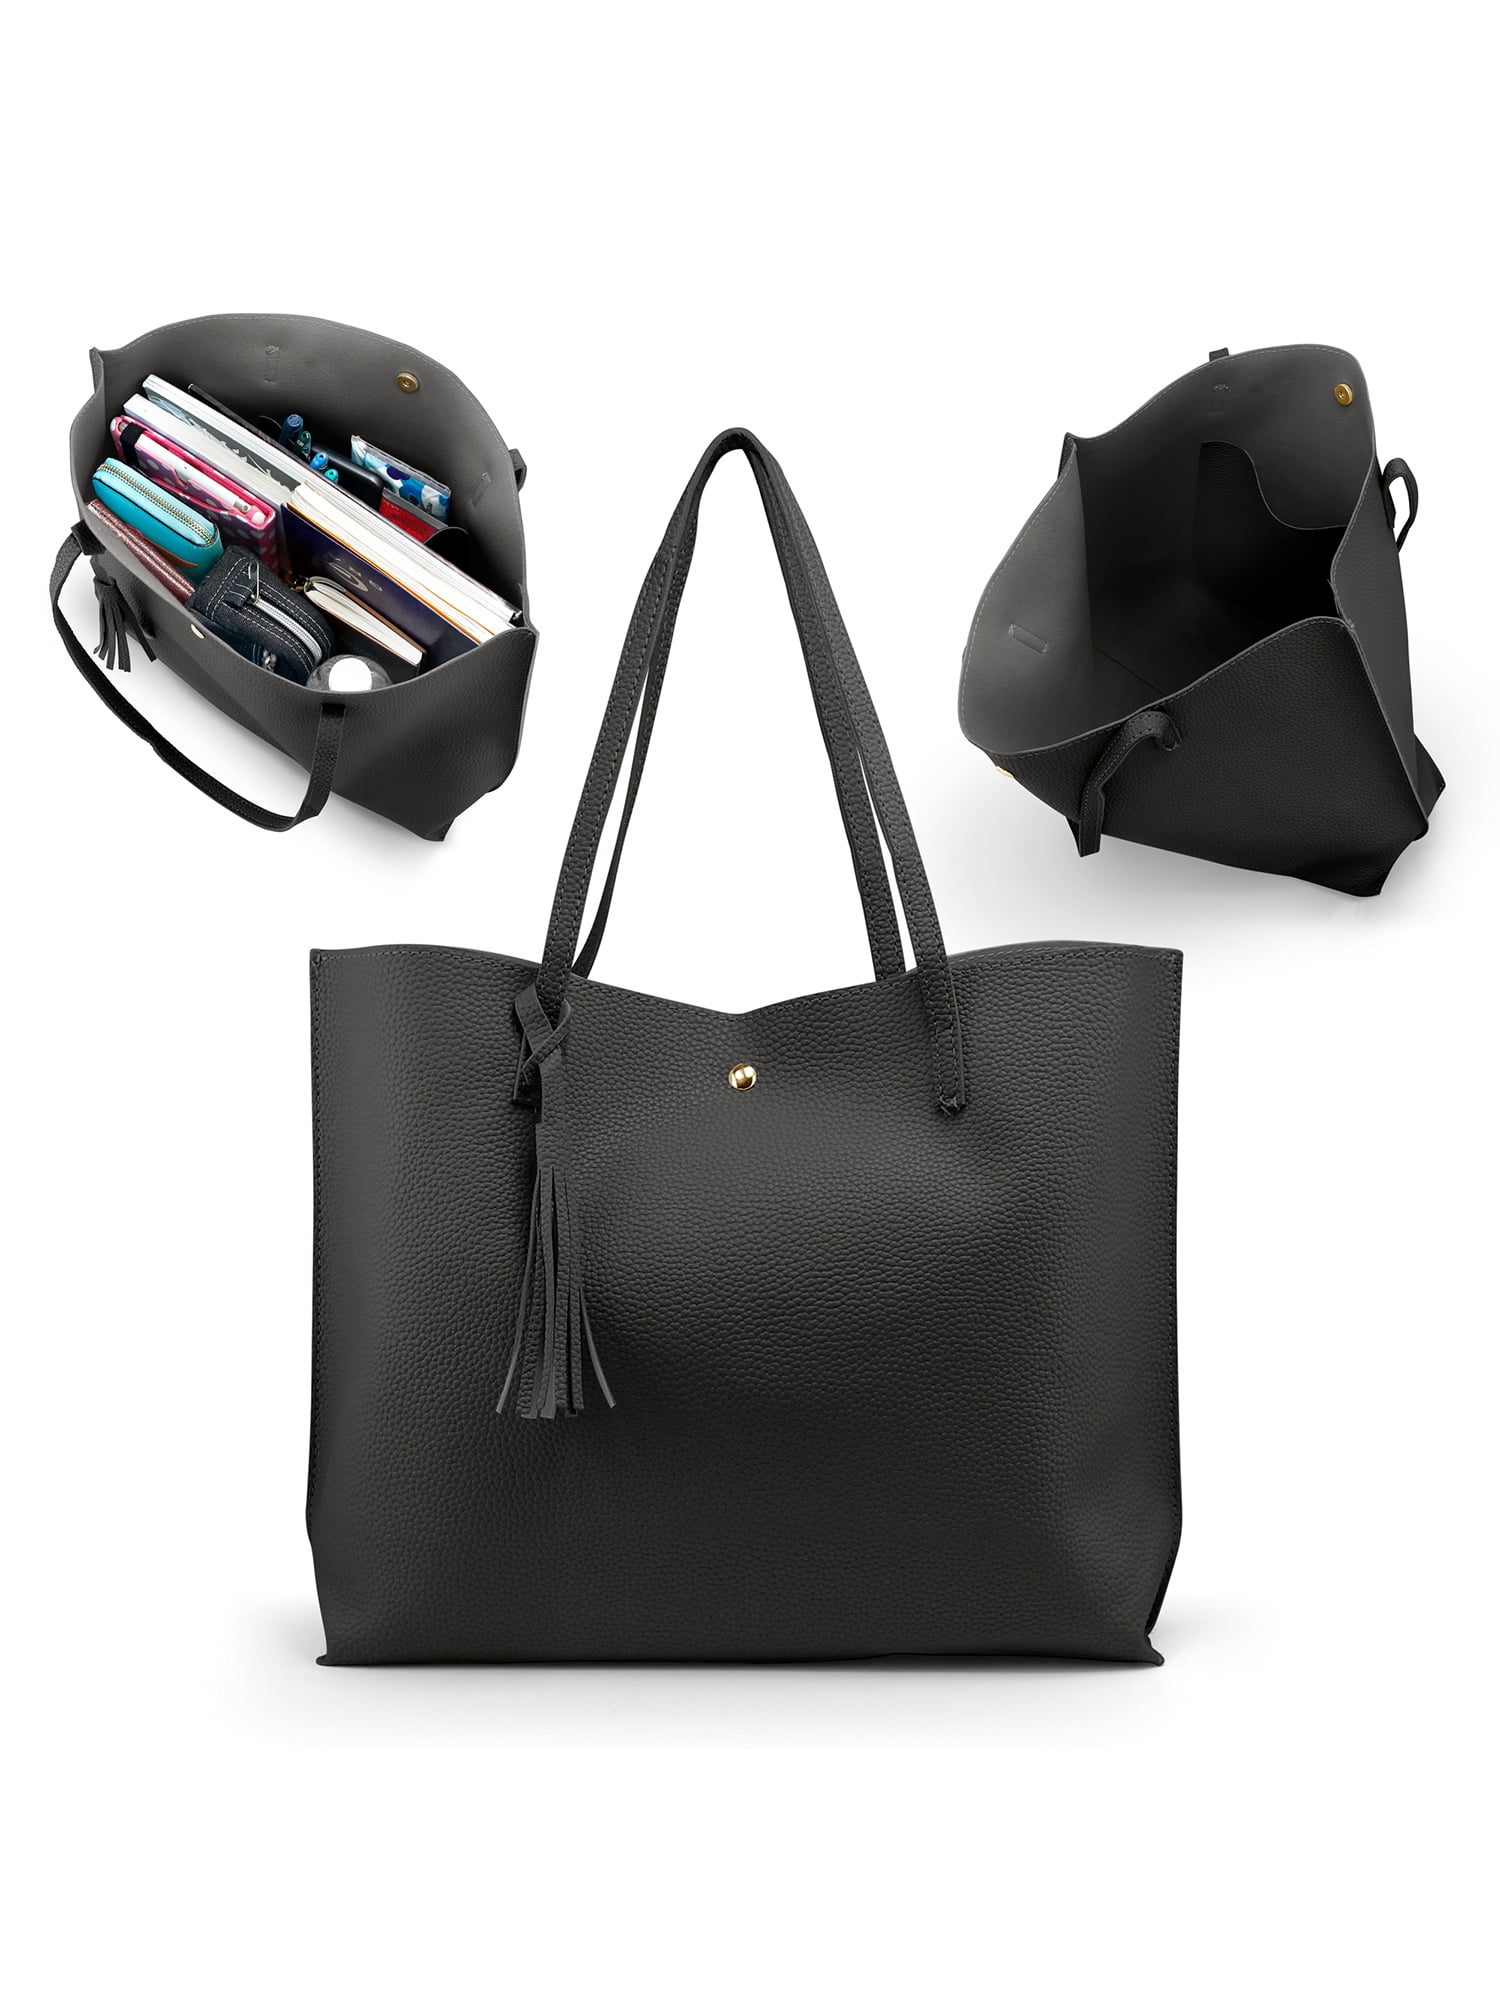 New Ladies Handbag Tote Purse Shoulder Bag Fashion Women Messenger Bag Satchel 